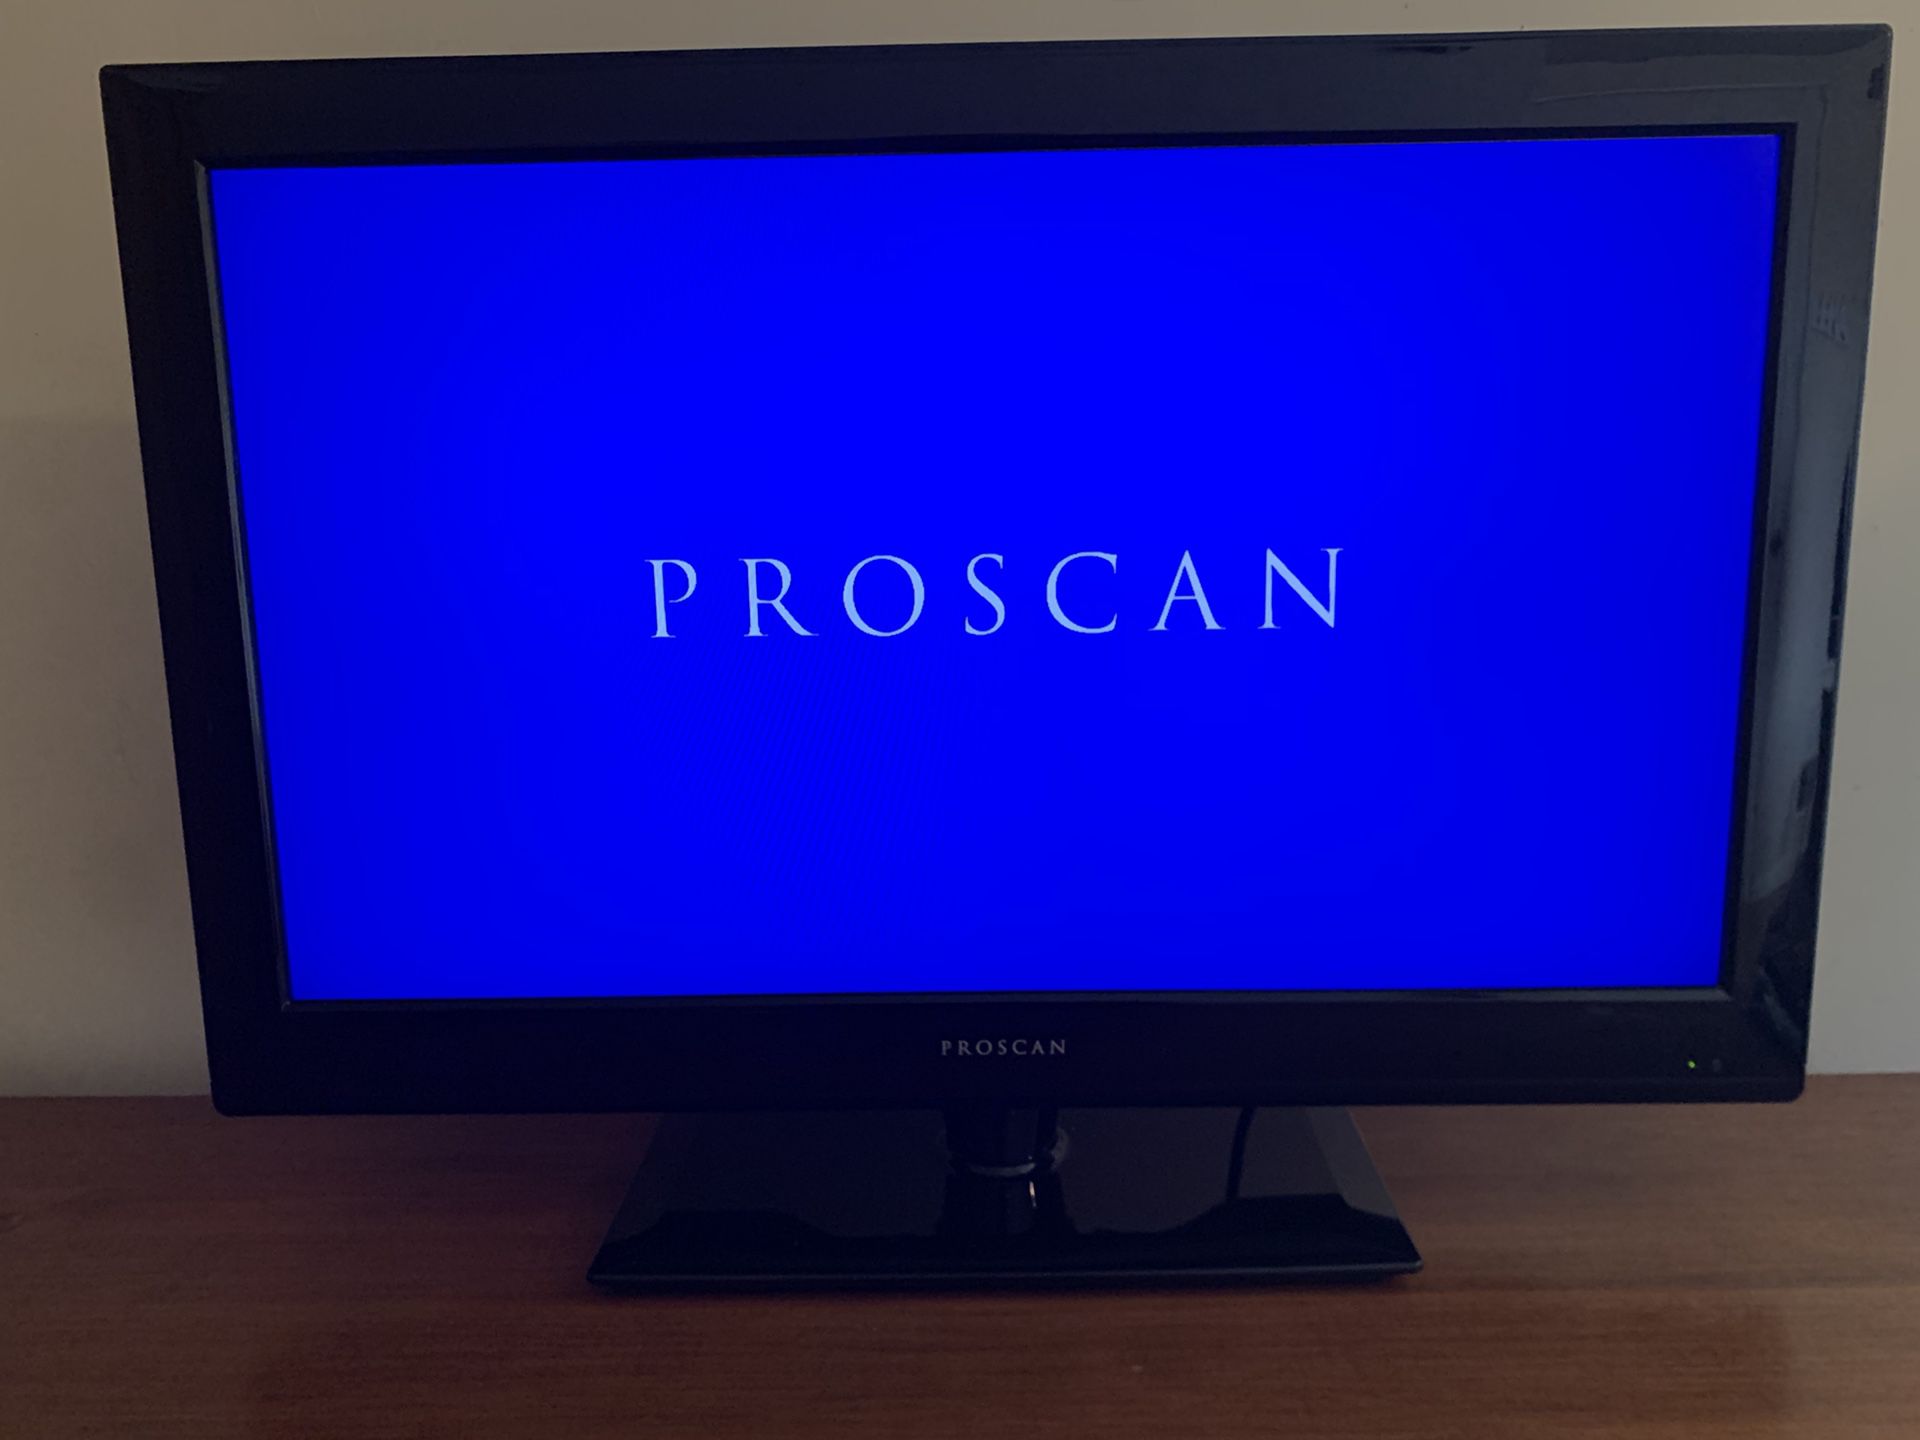 Proscan 32” Flat Screen